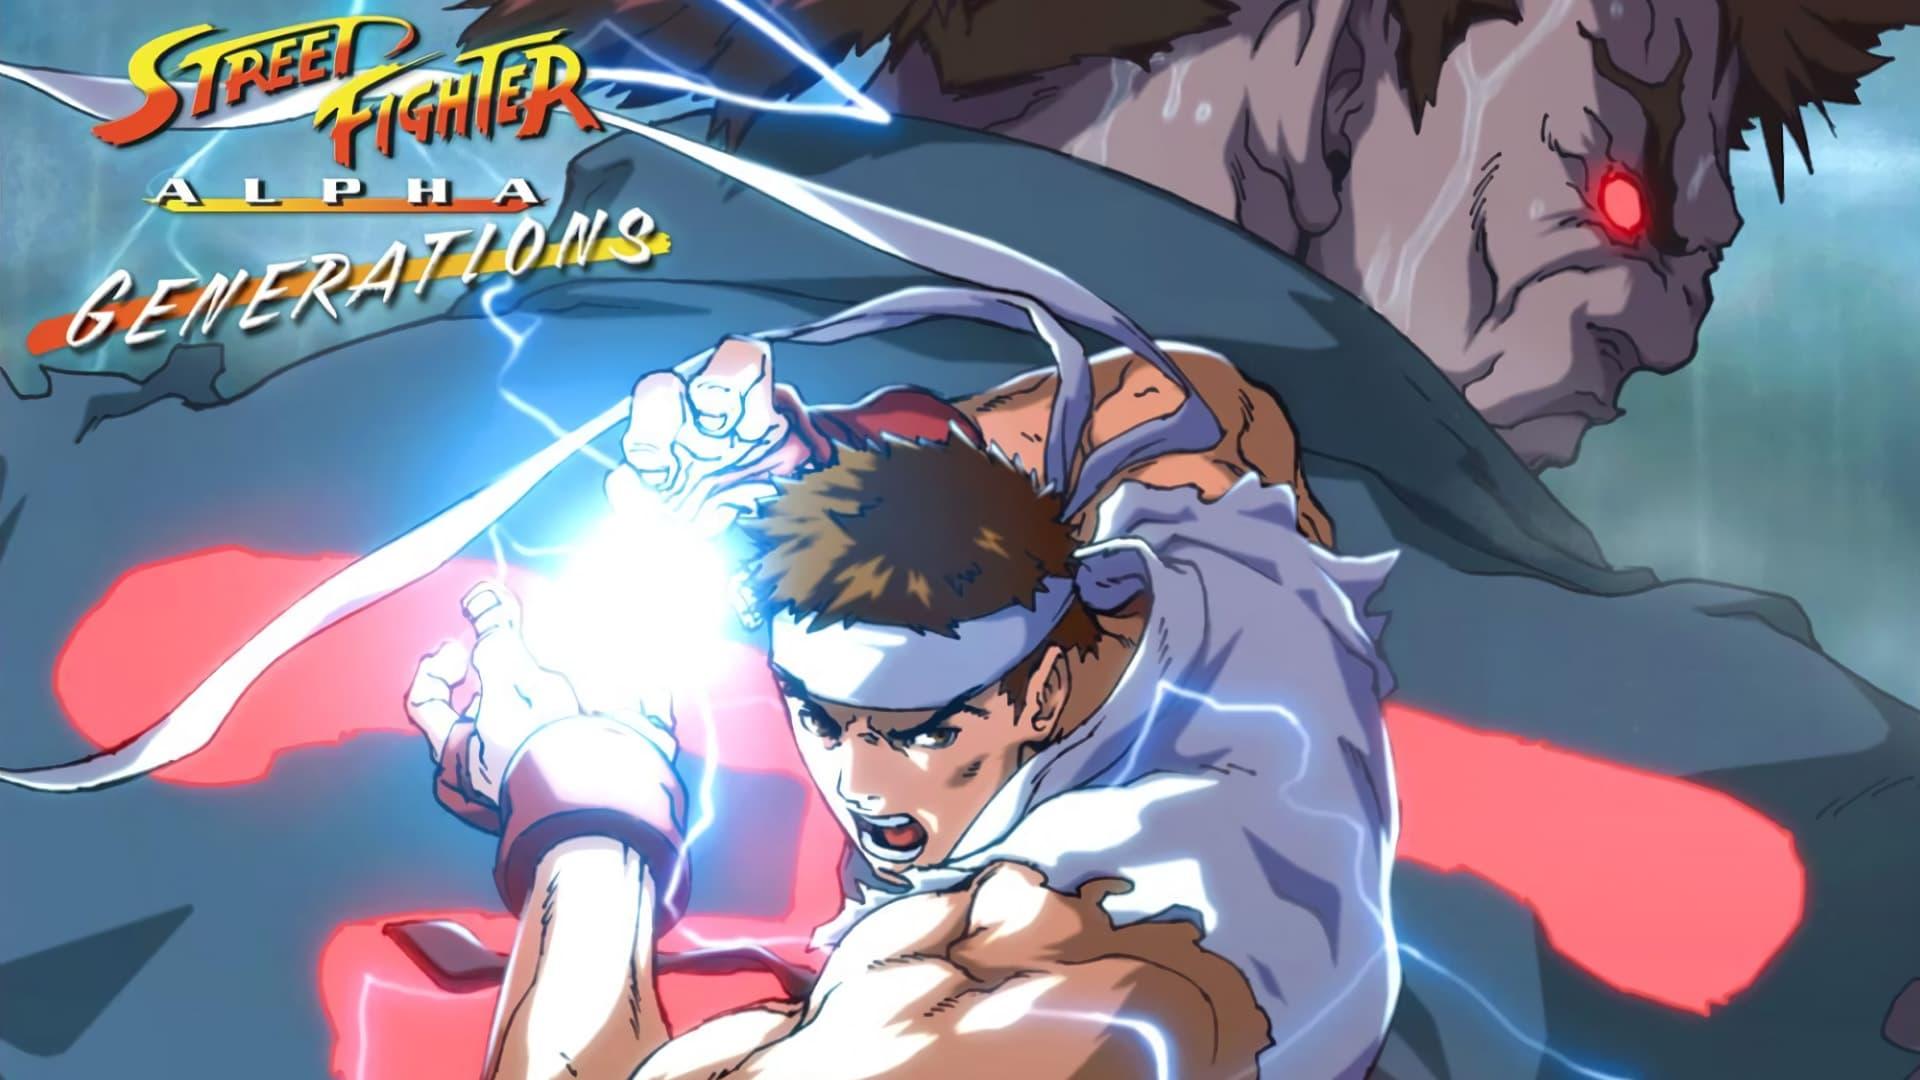 Street Fighter Alpha: Generations backdrop